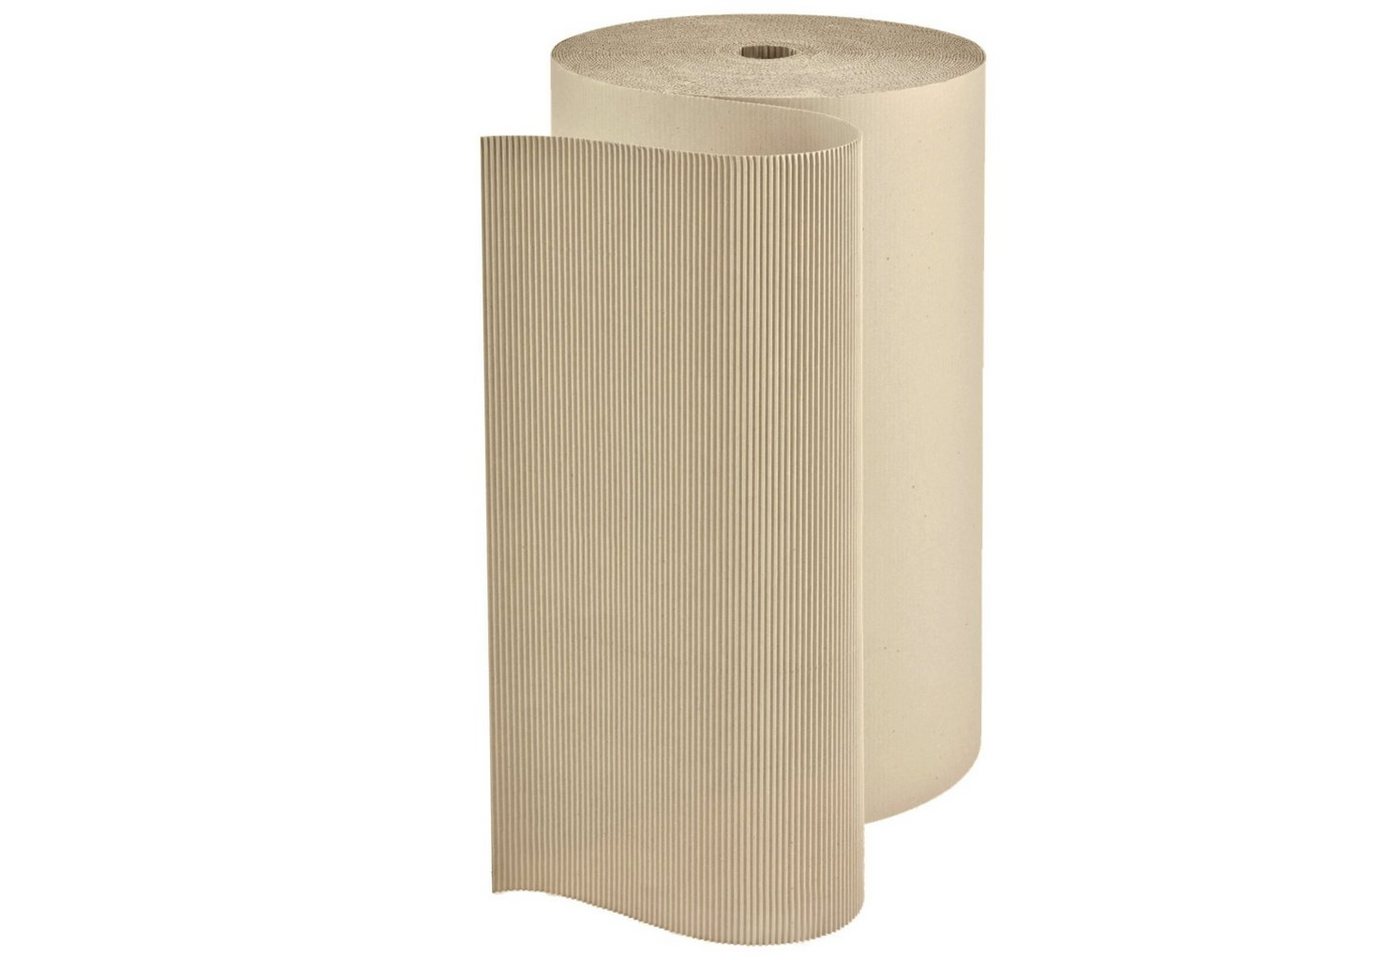 KK Verpackungen Seidenpapier, Rollen-Wellenpappe Polstermaterial Wellpappe Breite 1m Grau von KK Verpackungen